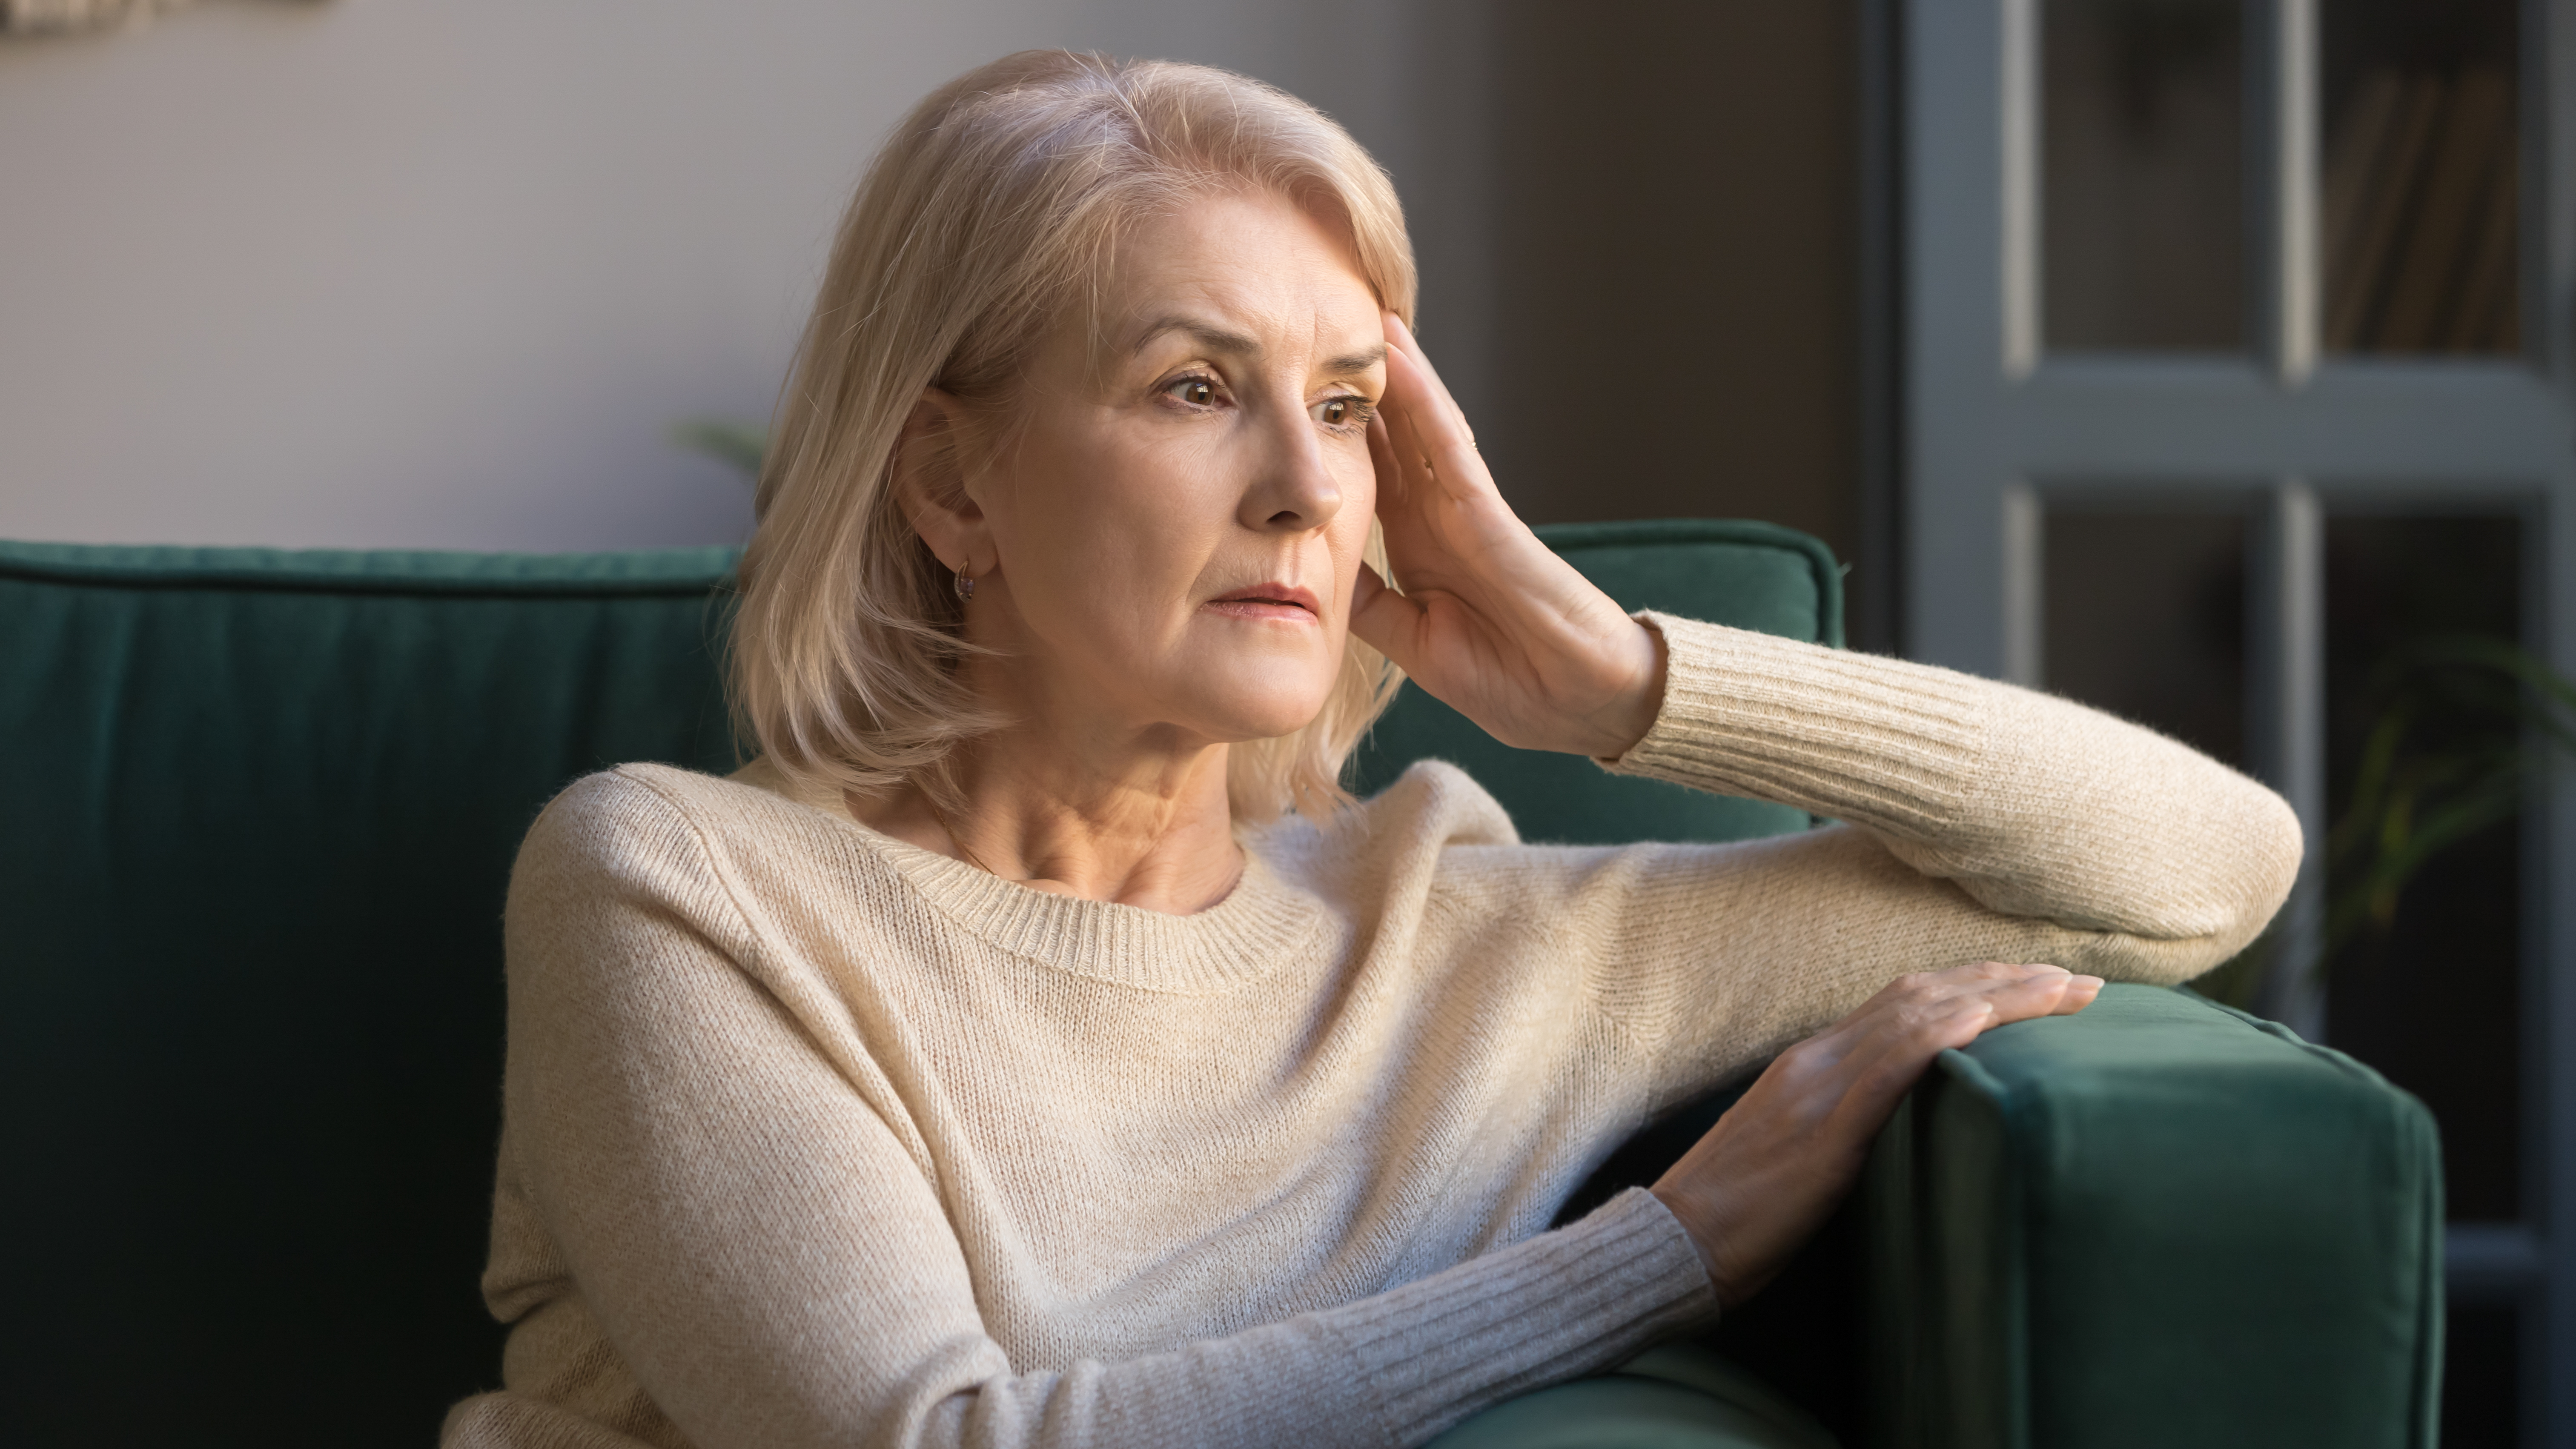 A thoughtful senior woman looking away | Source: Shutterstock